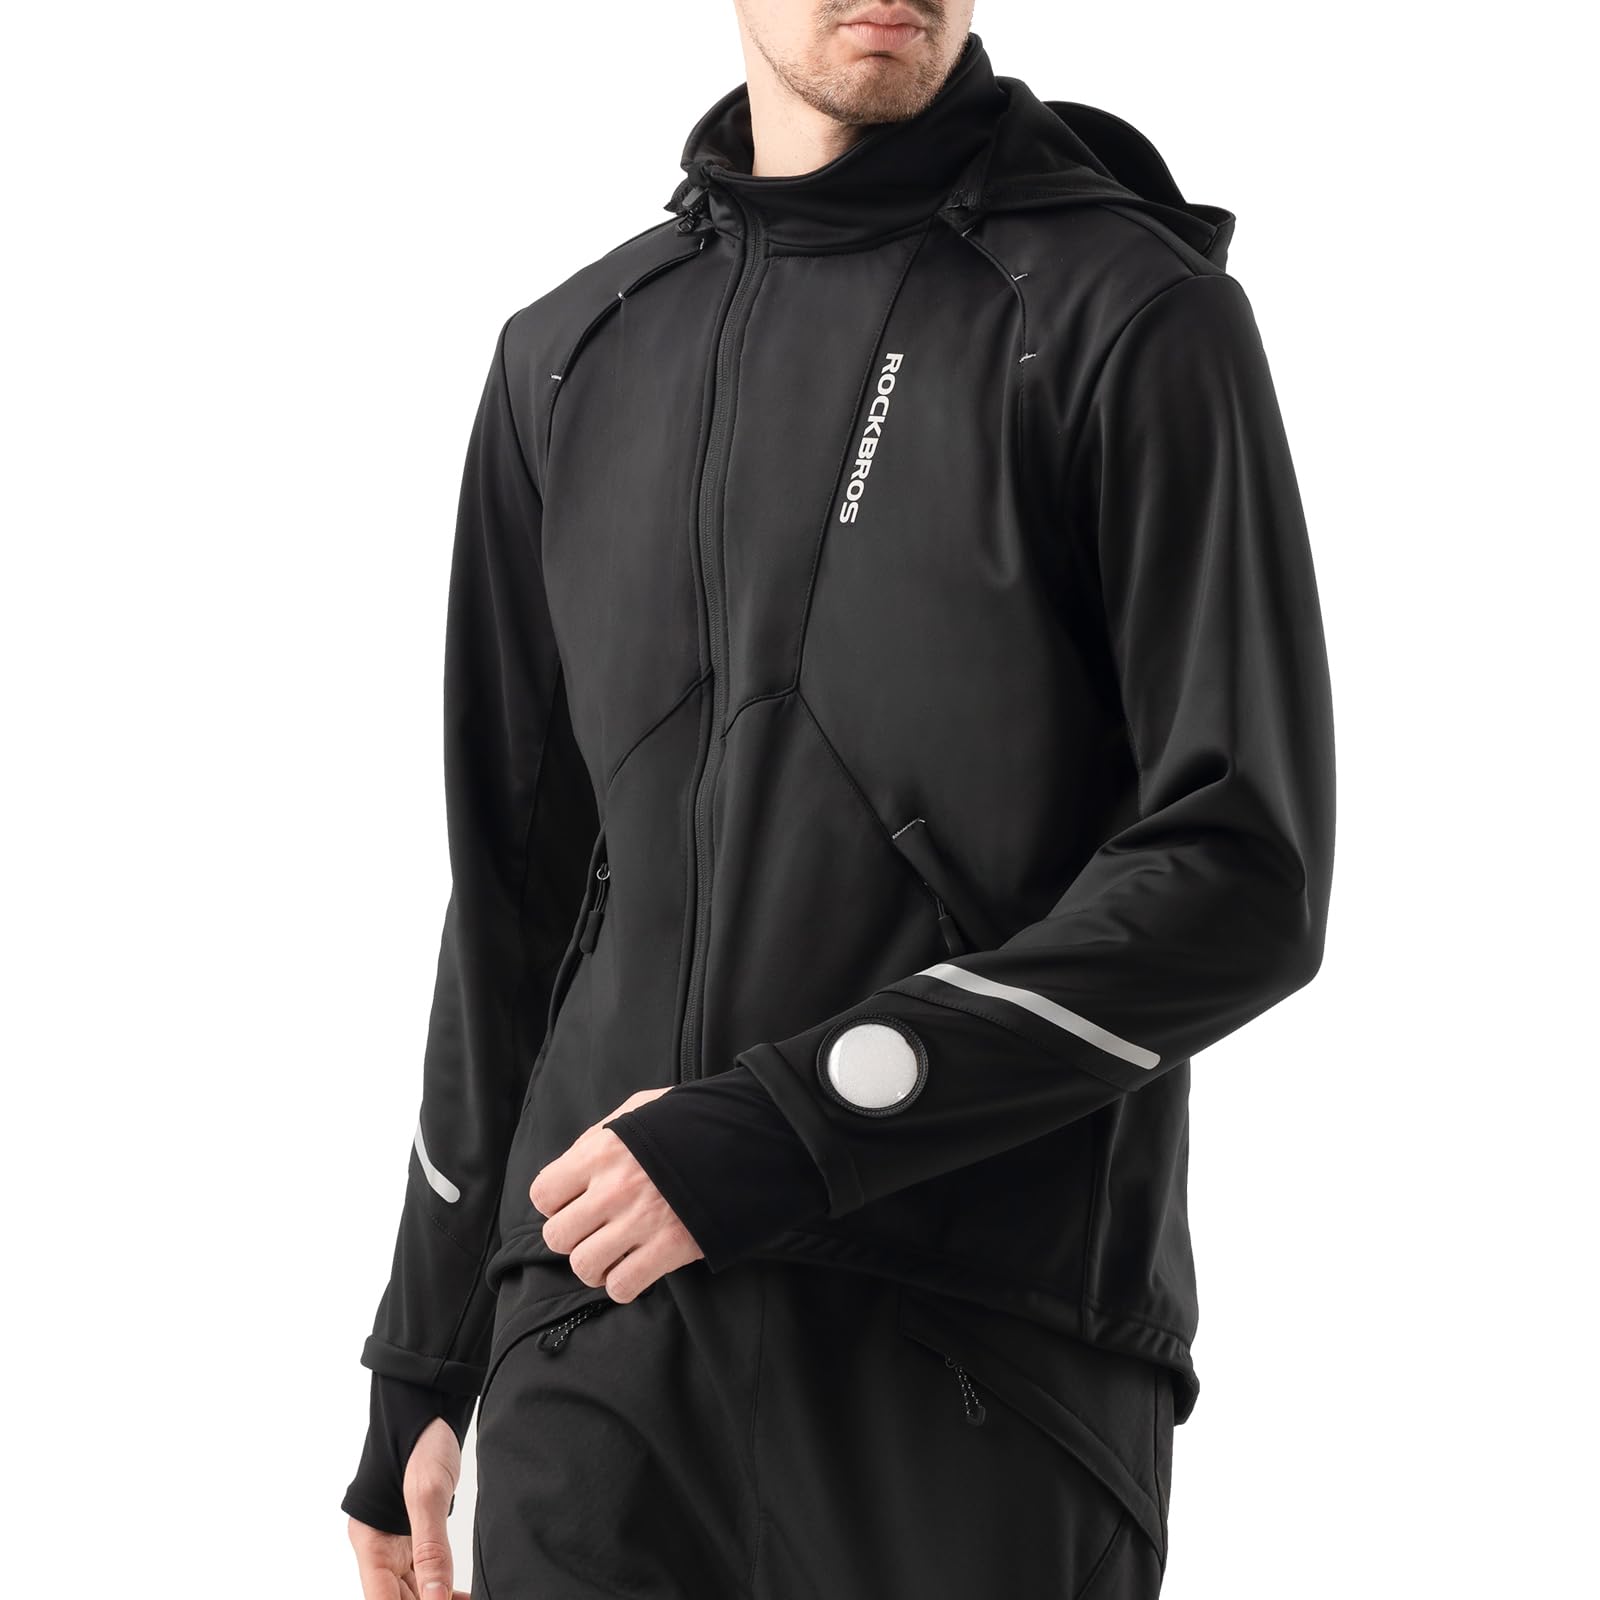 ROCKBROS Men's Cycling Jacket Thermal Softshell Jacket Windproof & Waterproof